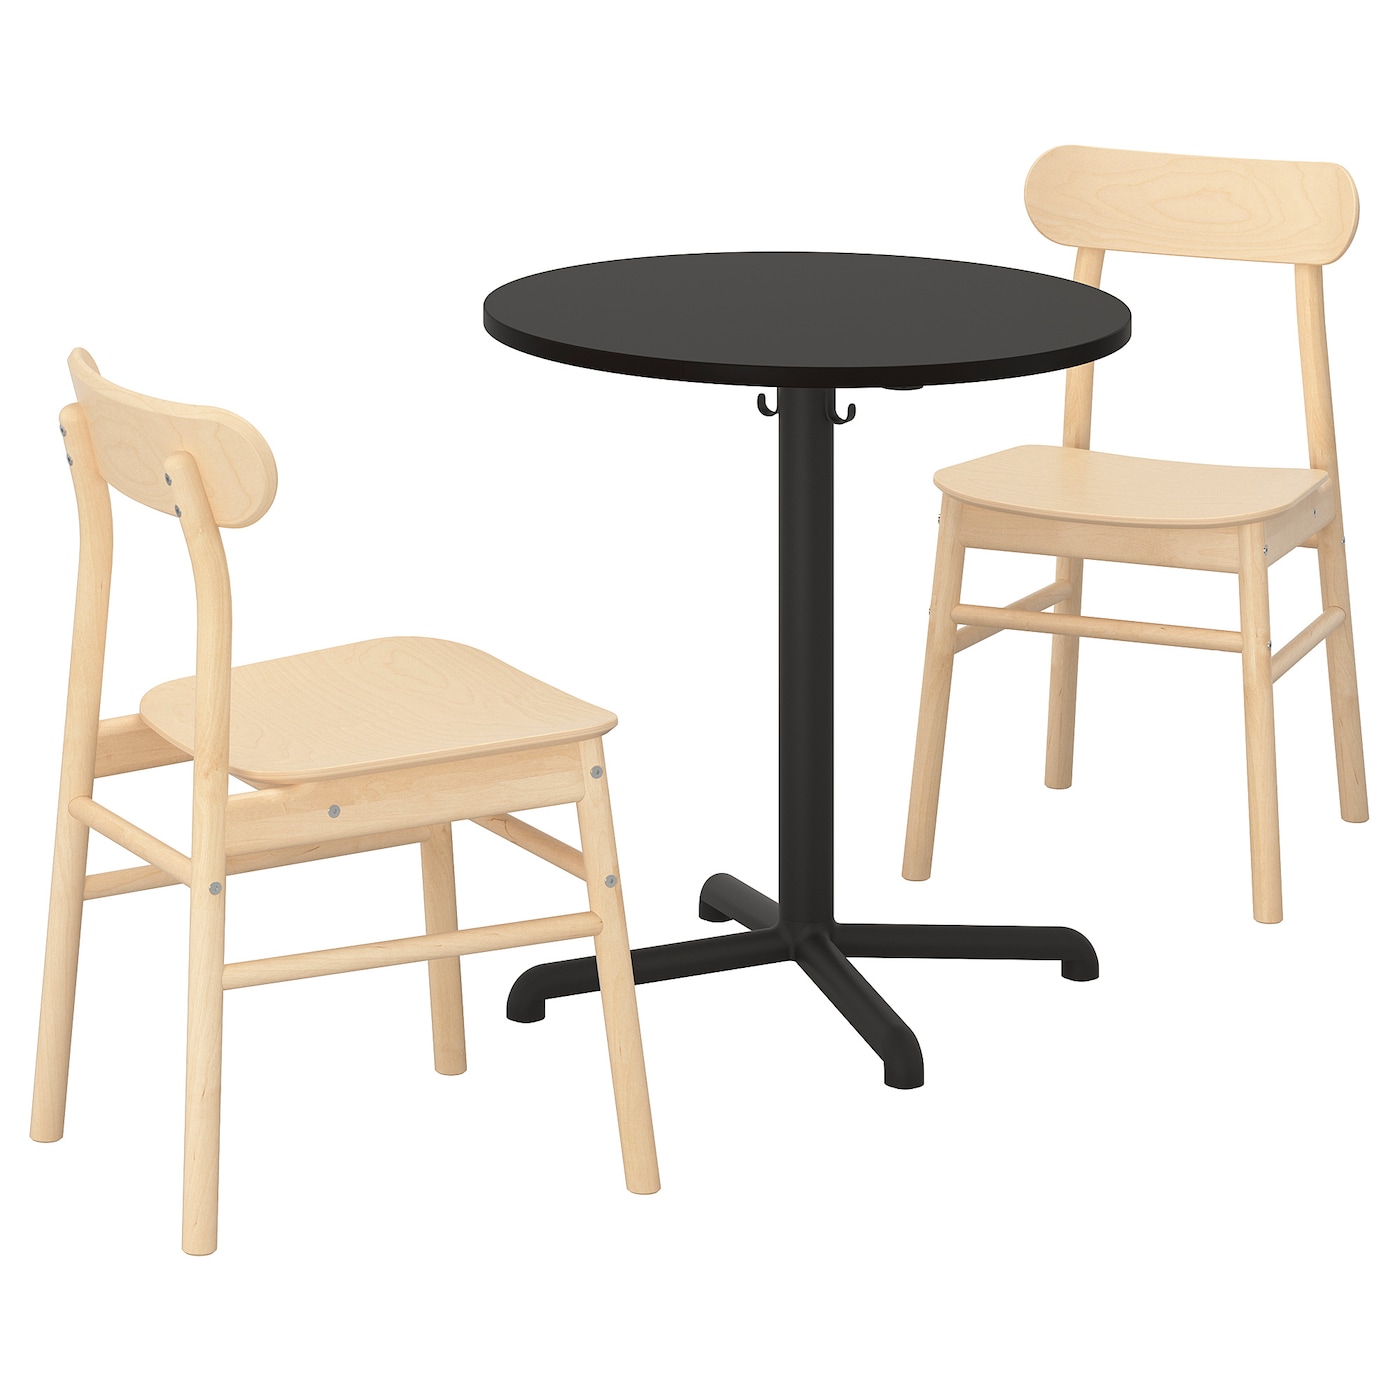 Стол и 2 стула - STENSELE / RÖNNINGE IKEA/СТЕНСЕЛЕ/РЕННИНГЕ ИКЕА,70 см, черный/бежевый